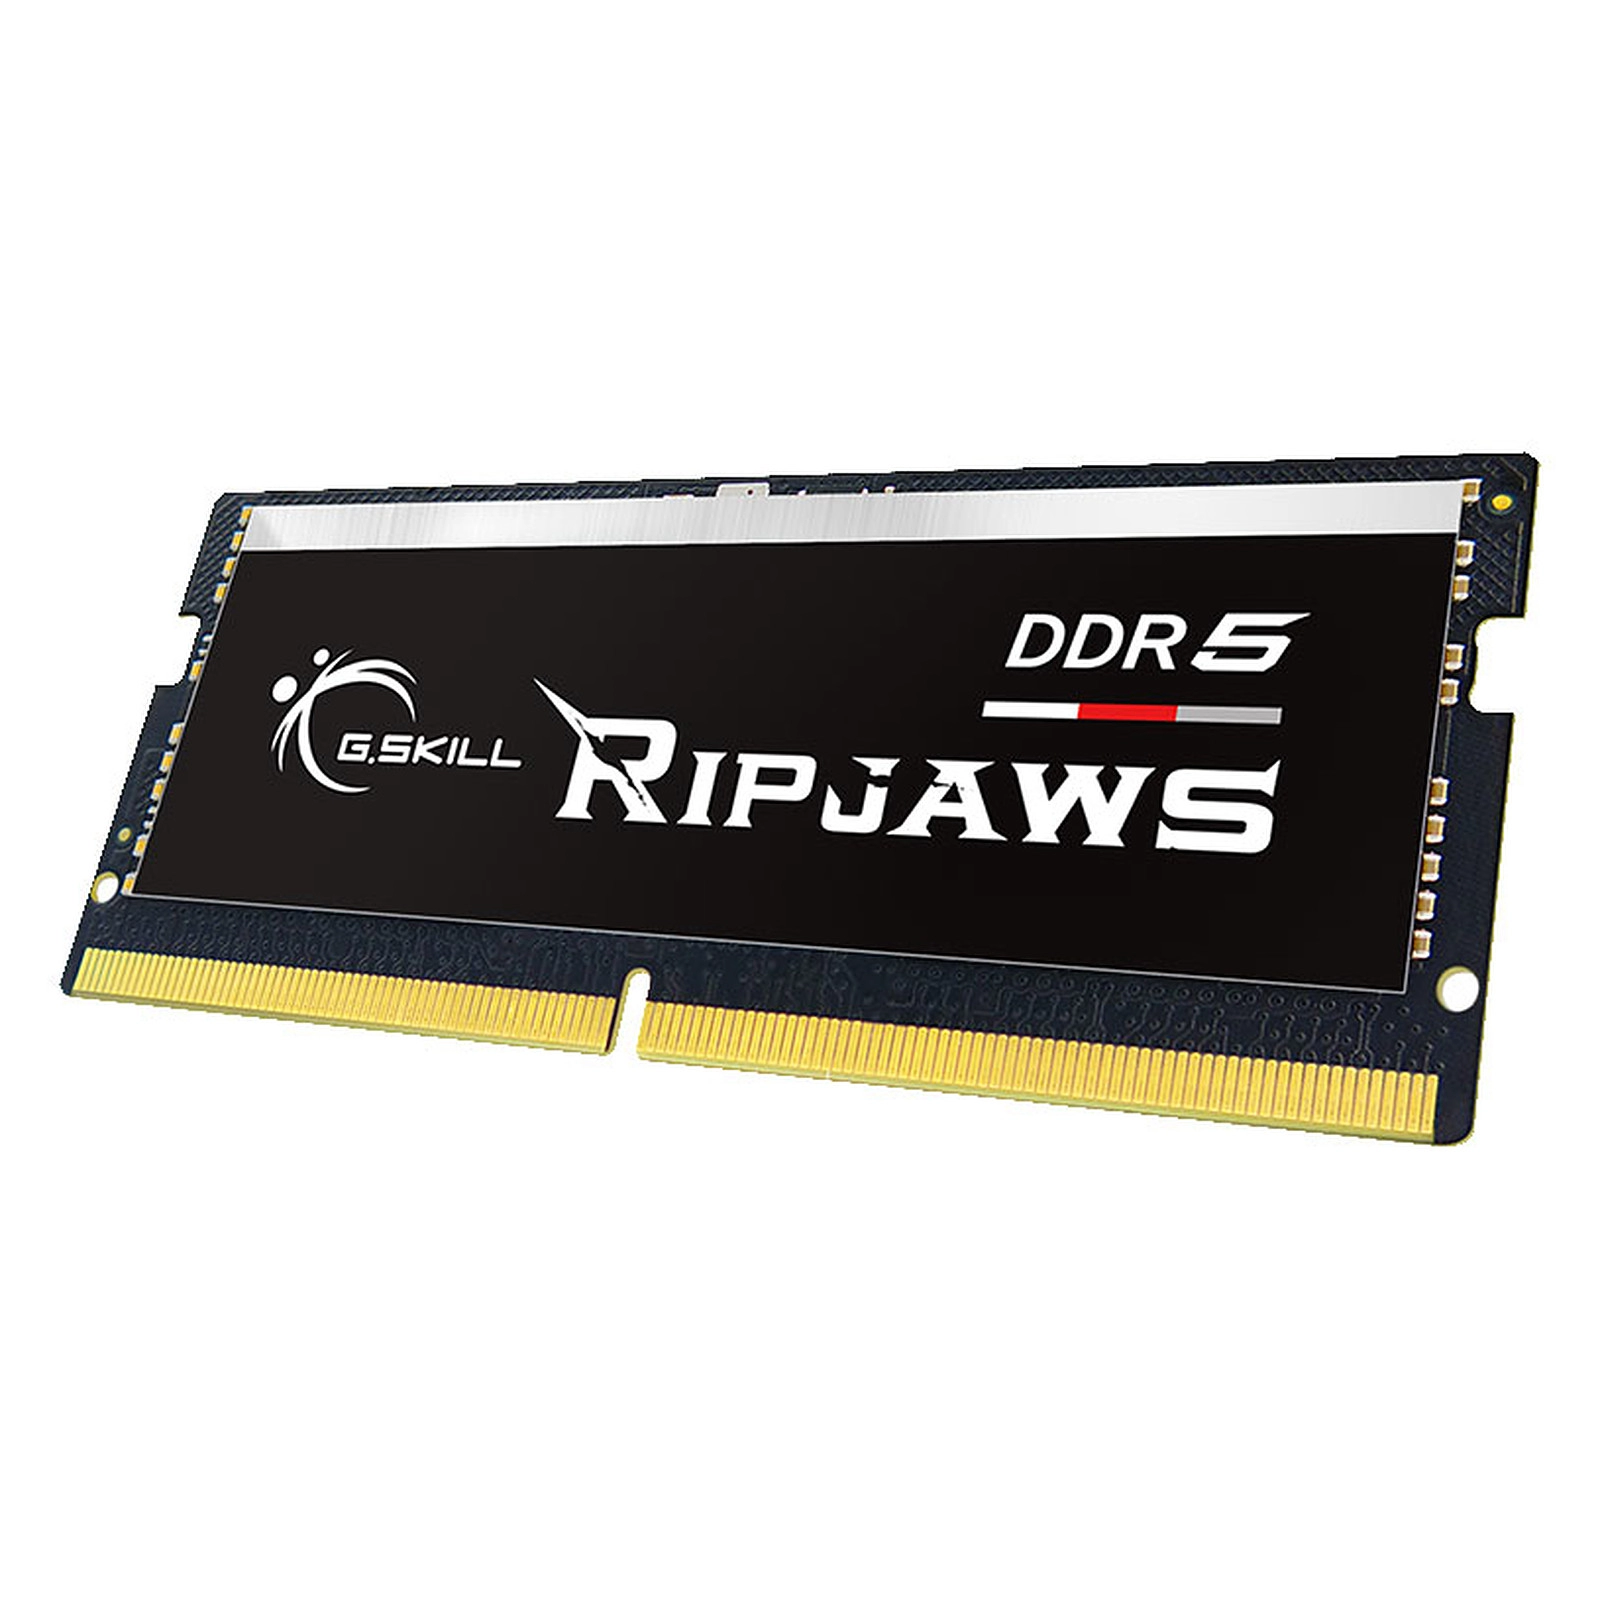 G.Skill RipJaws 16 GB DDR5 5200 MHz SODIMM